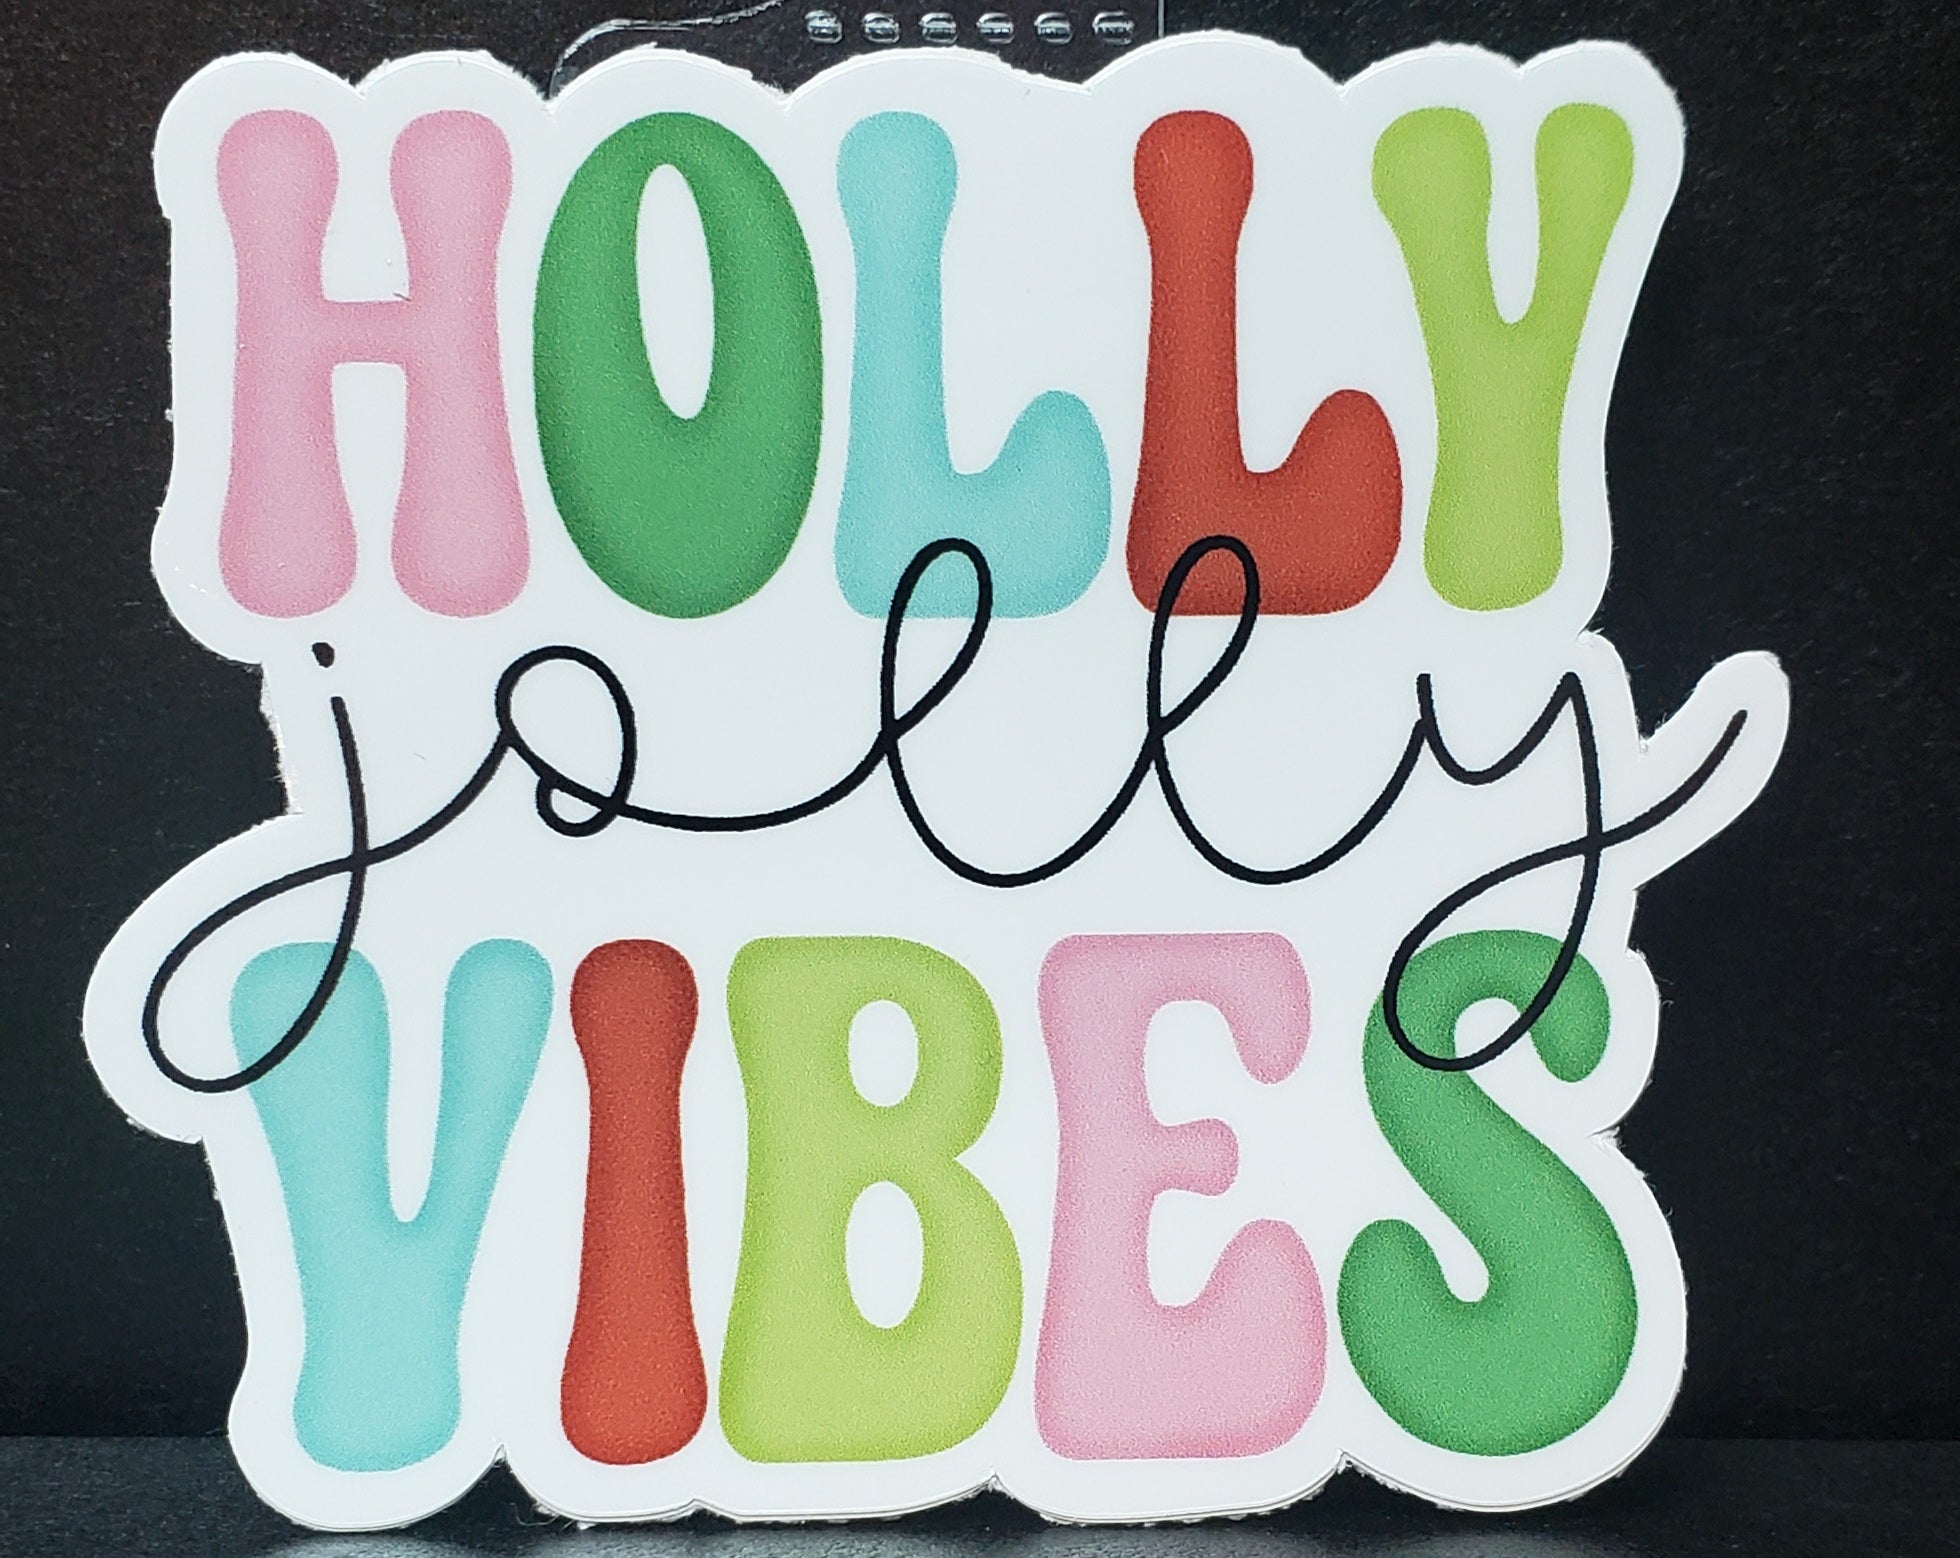 Holly Jolly Vibes - Vinyl Sticker Decal